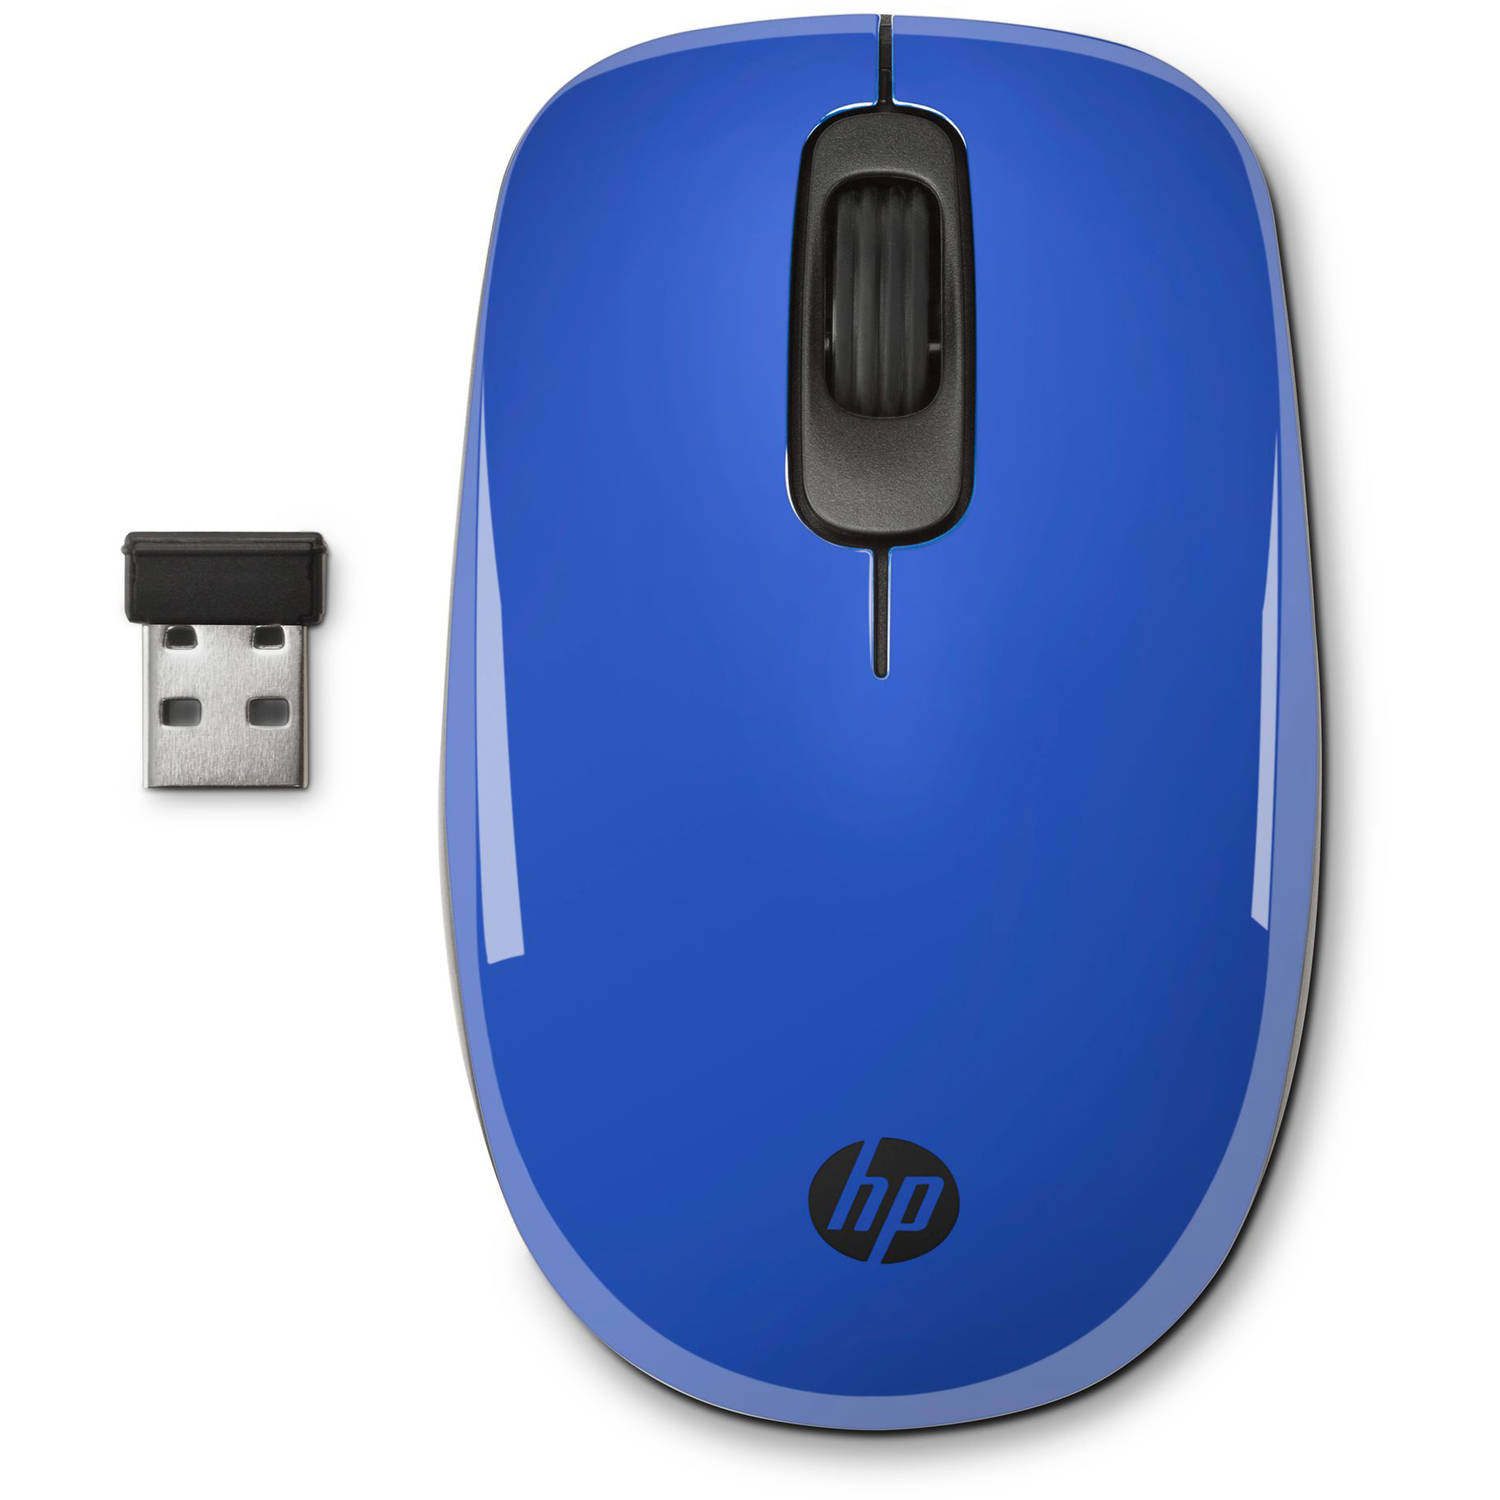 HP J1B52AA#ABA Wireless Mouse, Blue - image 1 of 5